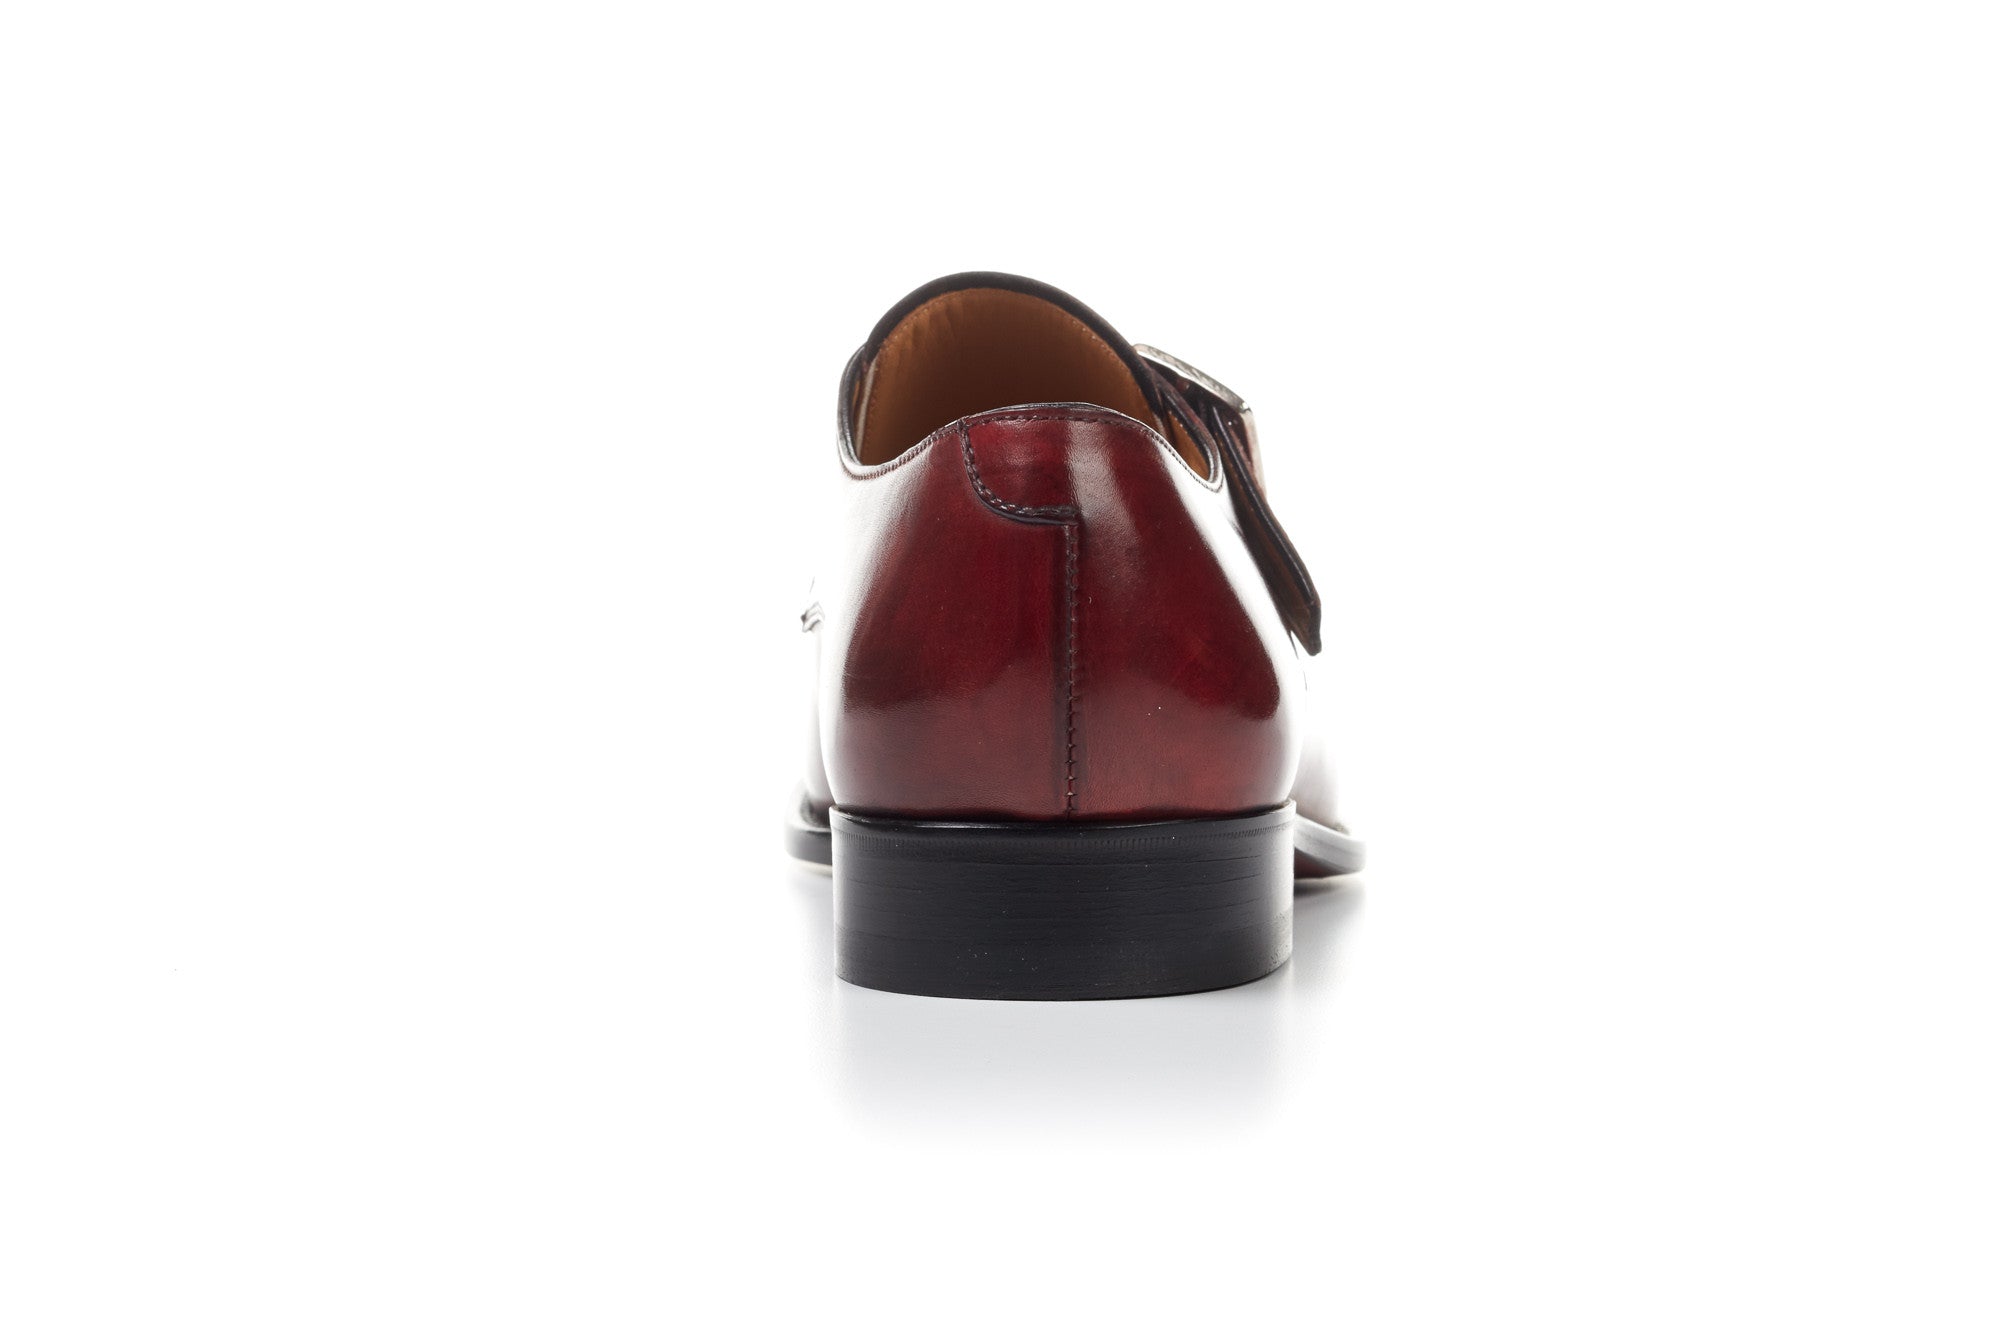 Paul Evans Handmade Italian Leather Men's Dress Shoes - The Olivier Single Monk Strap - Oxblood